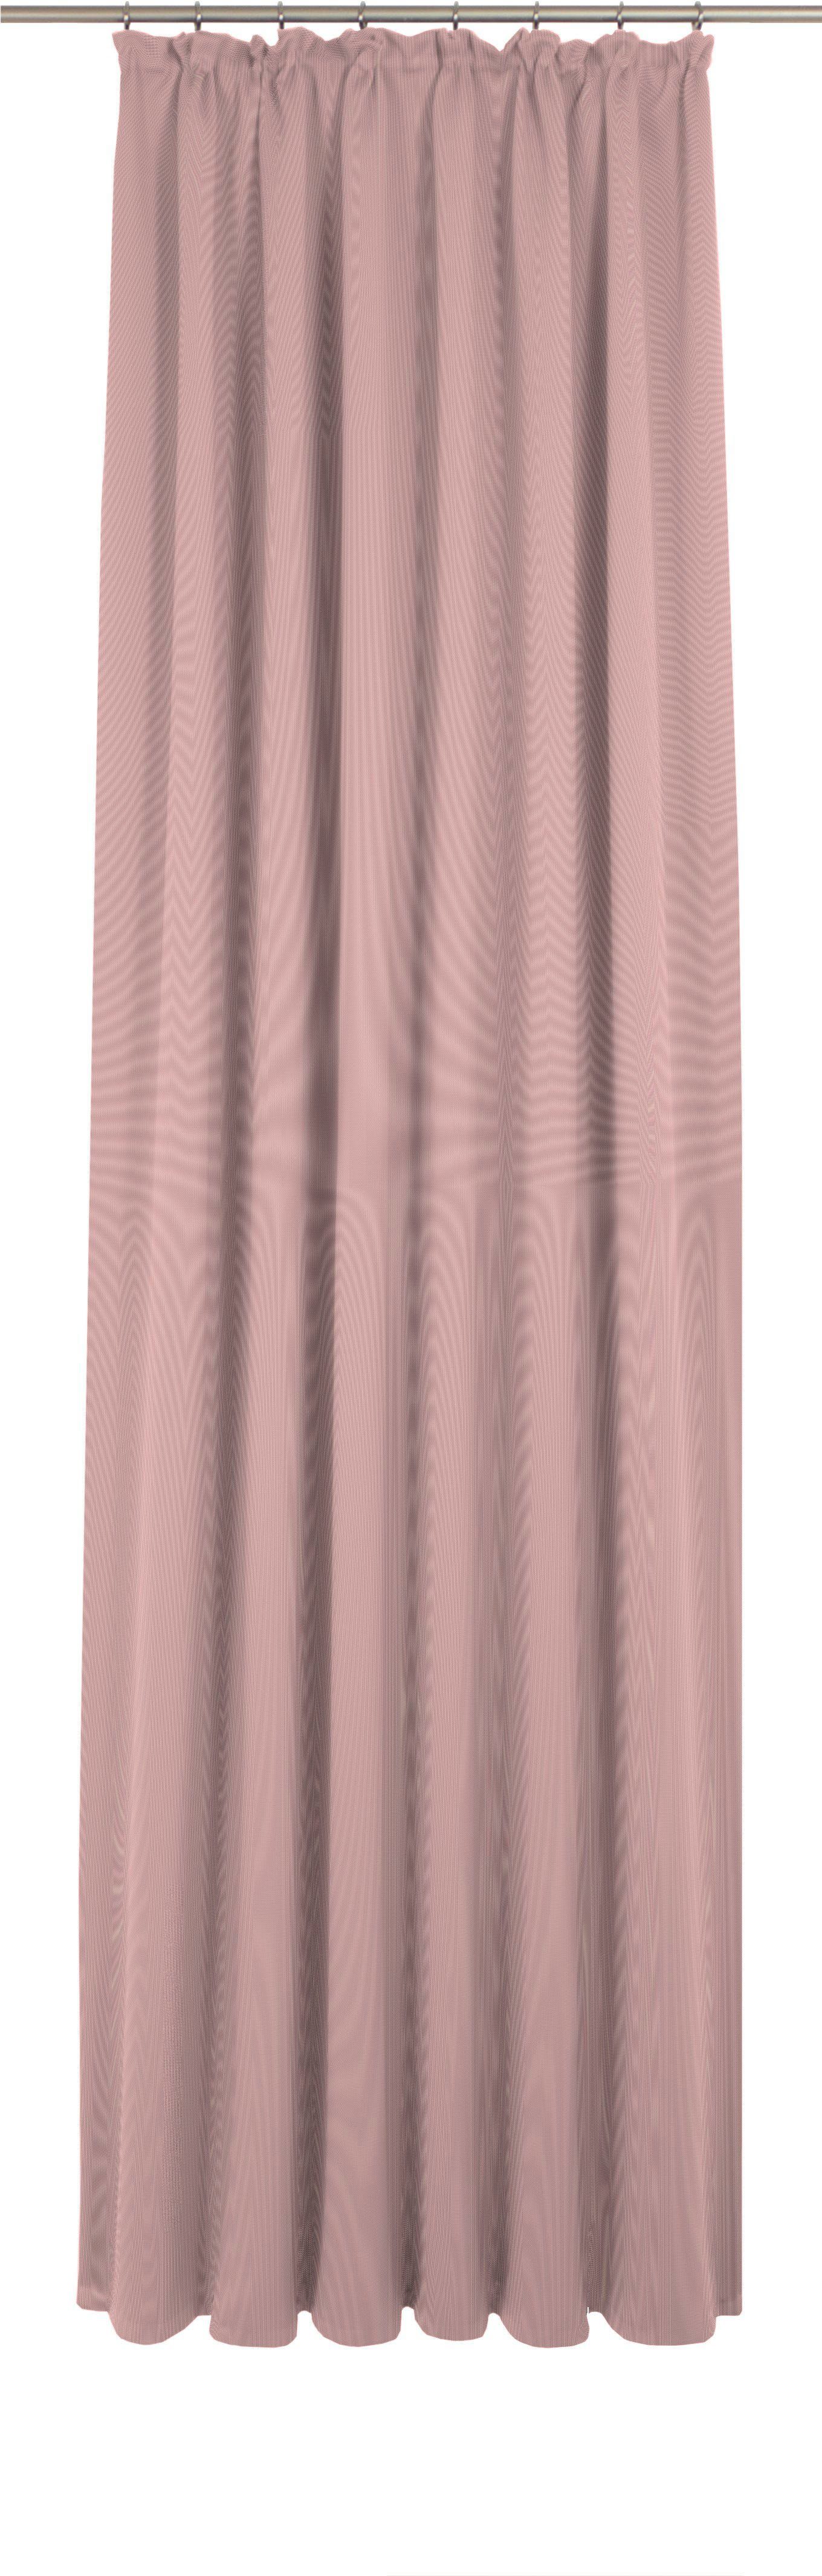 Vorhang Uni Collection, (1 nachhaltig rosa Kräuselband St), Jacquard, Adam, blickdicht